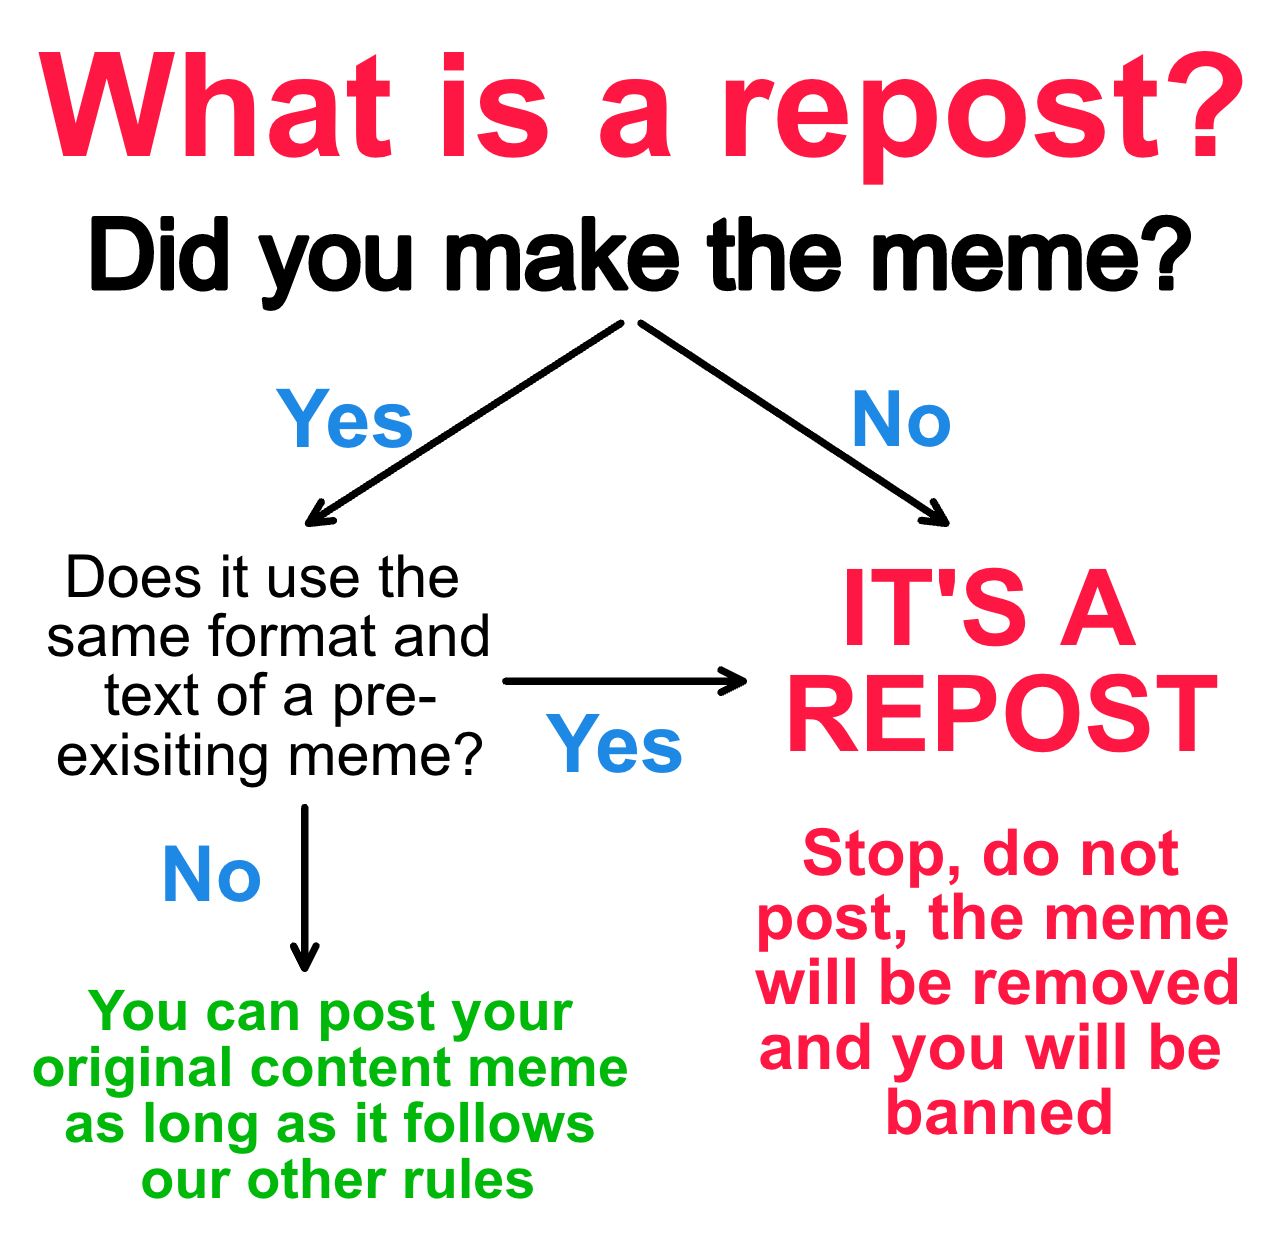 Let us explain "Rule 8: No Reposts"